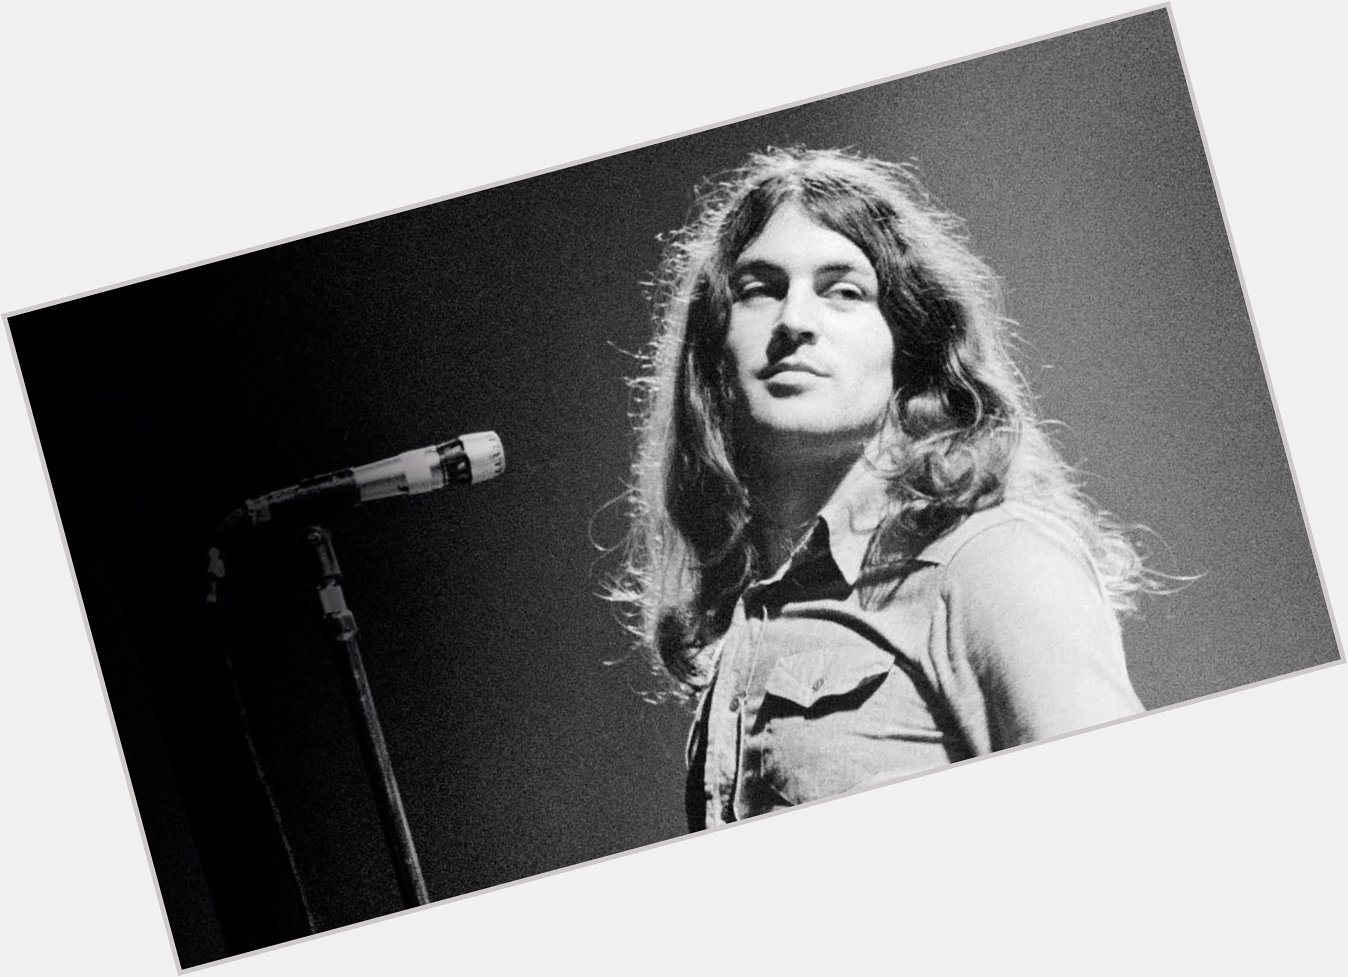 Happy birthday to Ian Gillan of Deep Purple & Black Sabbath. 